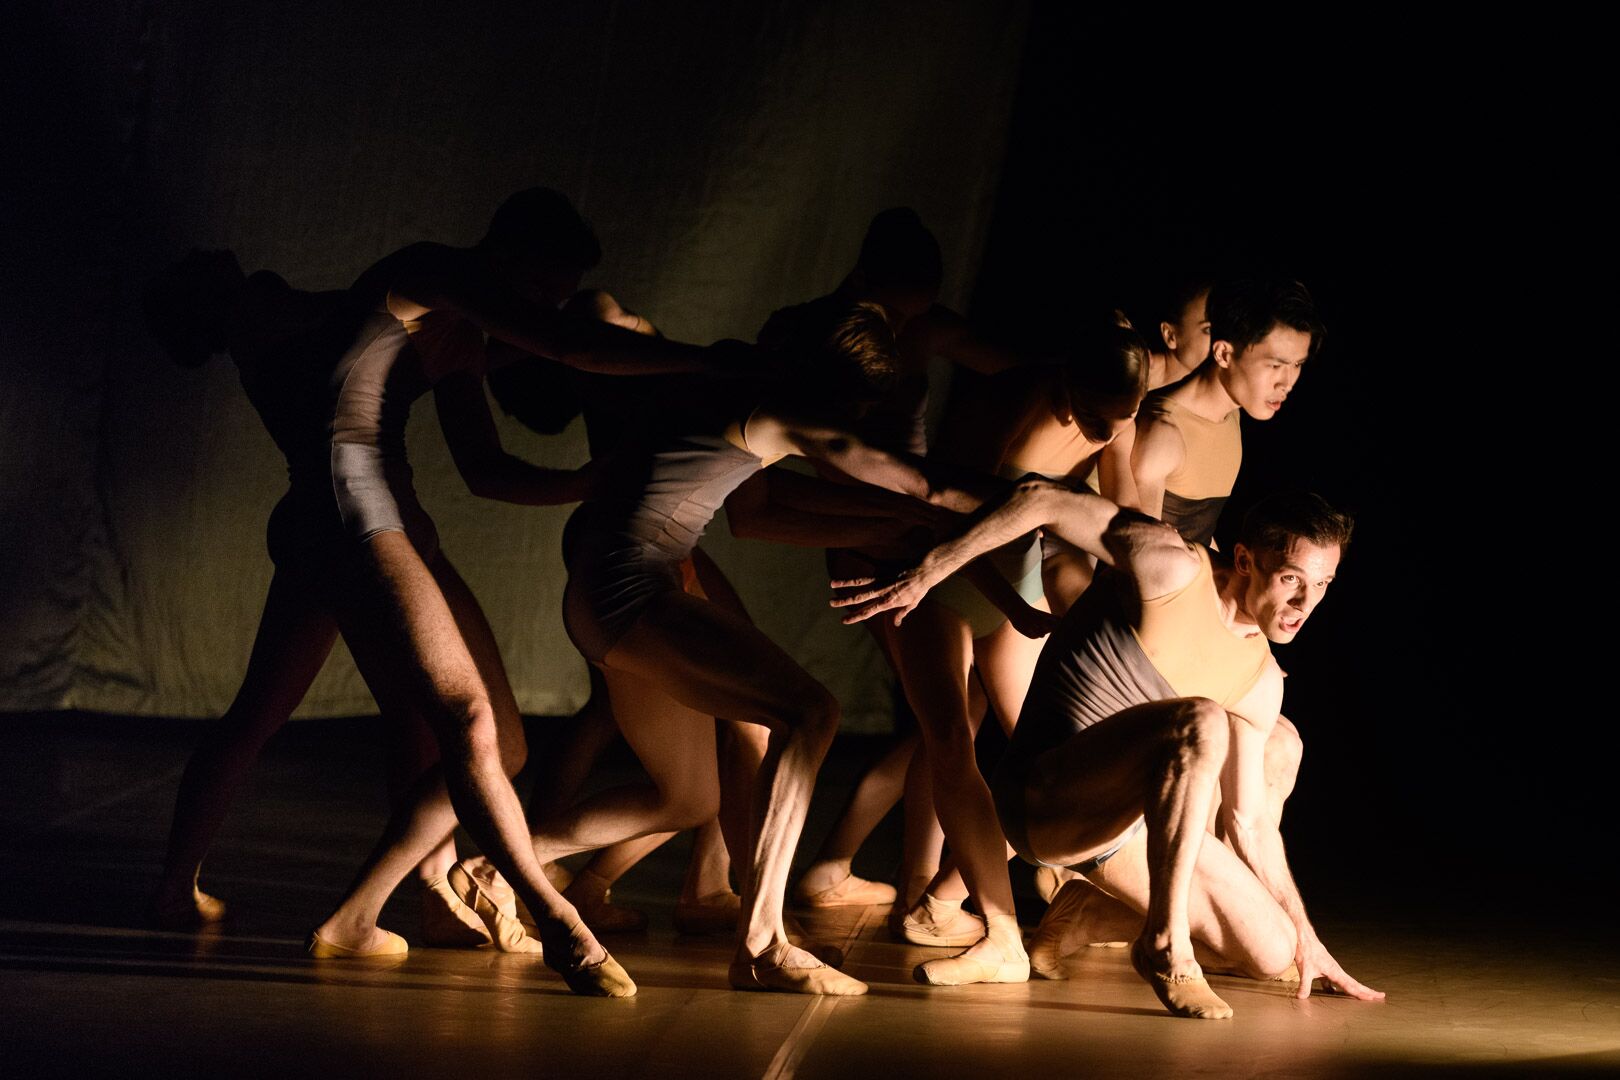   Transcription of Color.  Theater Ballet Moscow, Ensemble. Photo Natalie Doomco 